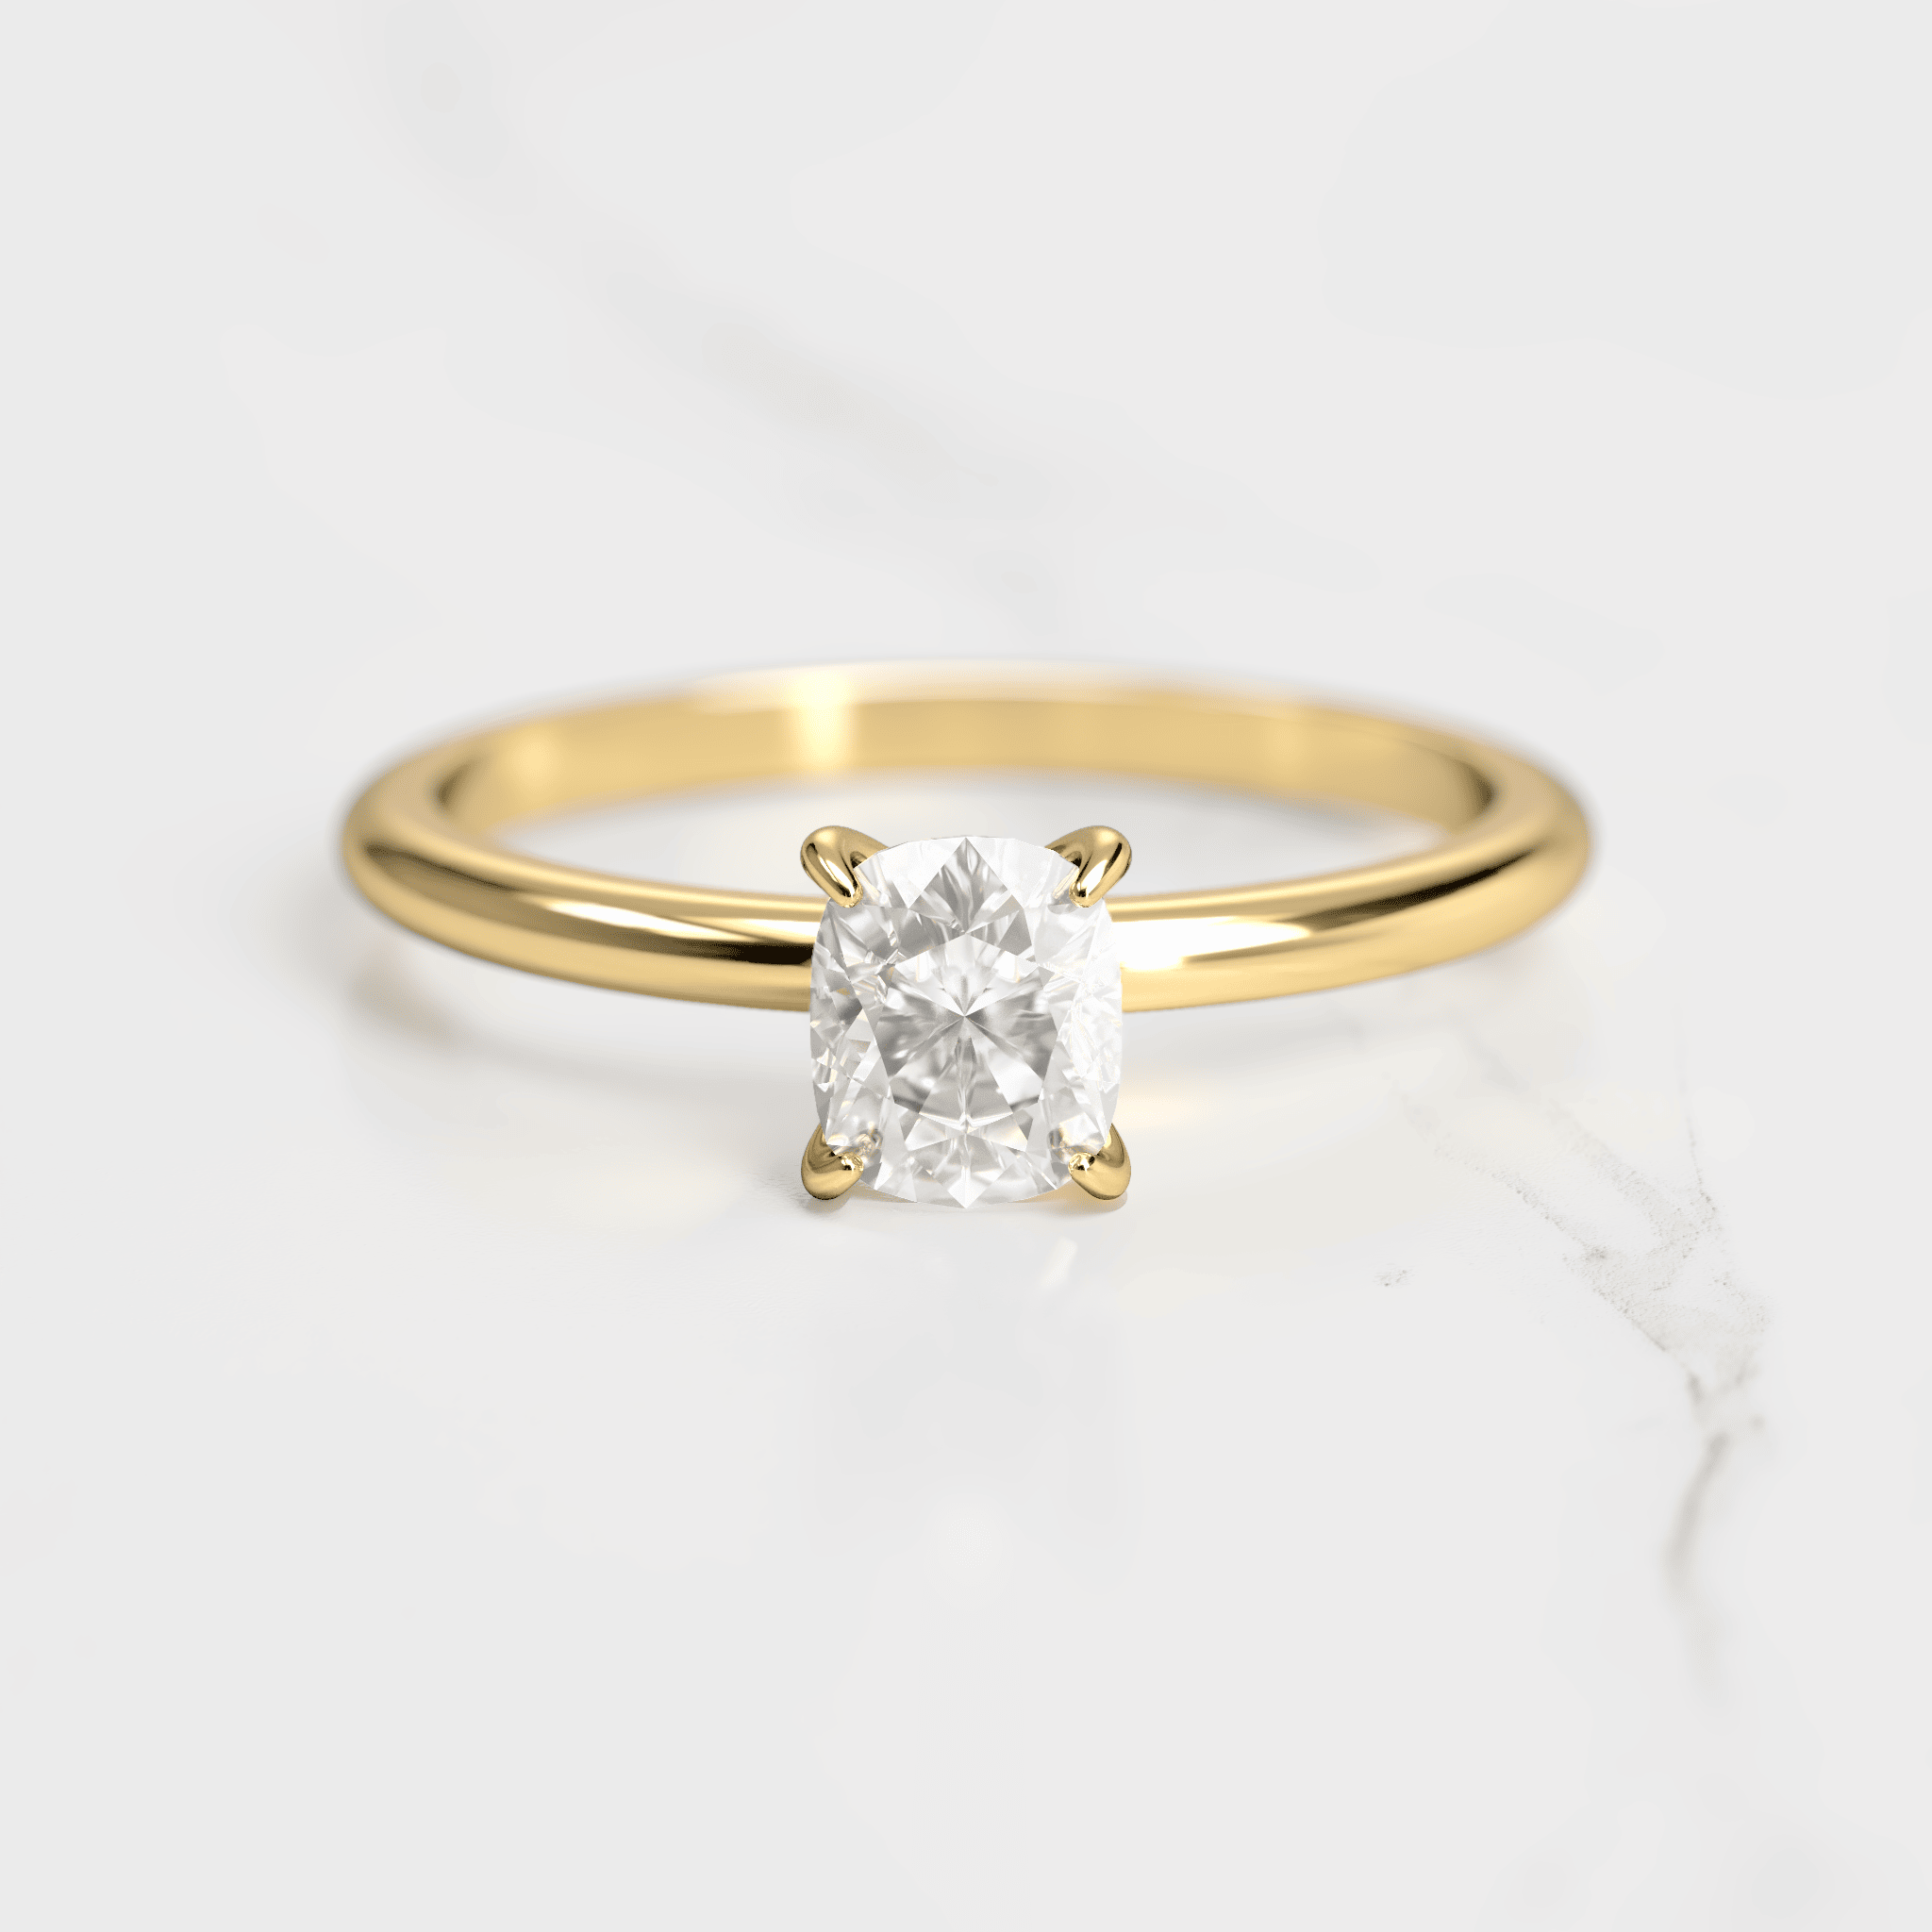 Cushion Solitaire Diamond Ring - 14k yellow gold / 1.50ct / natural diamond